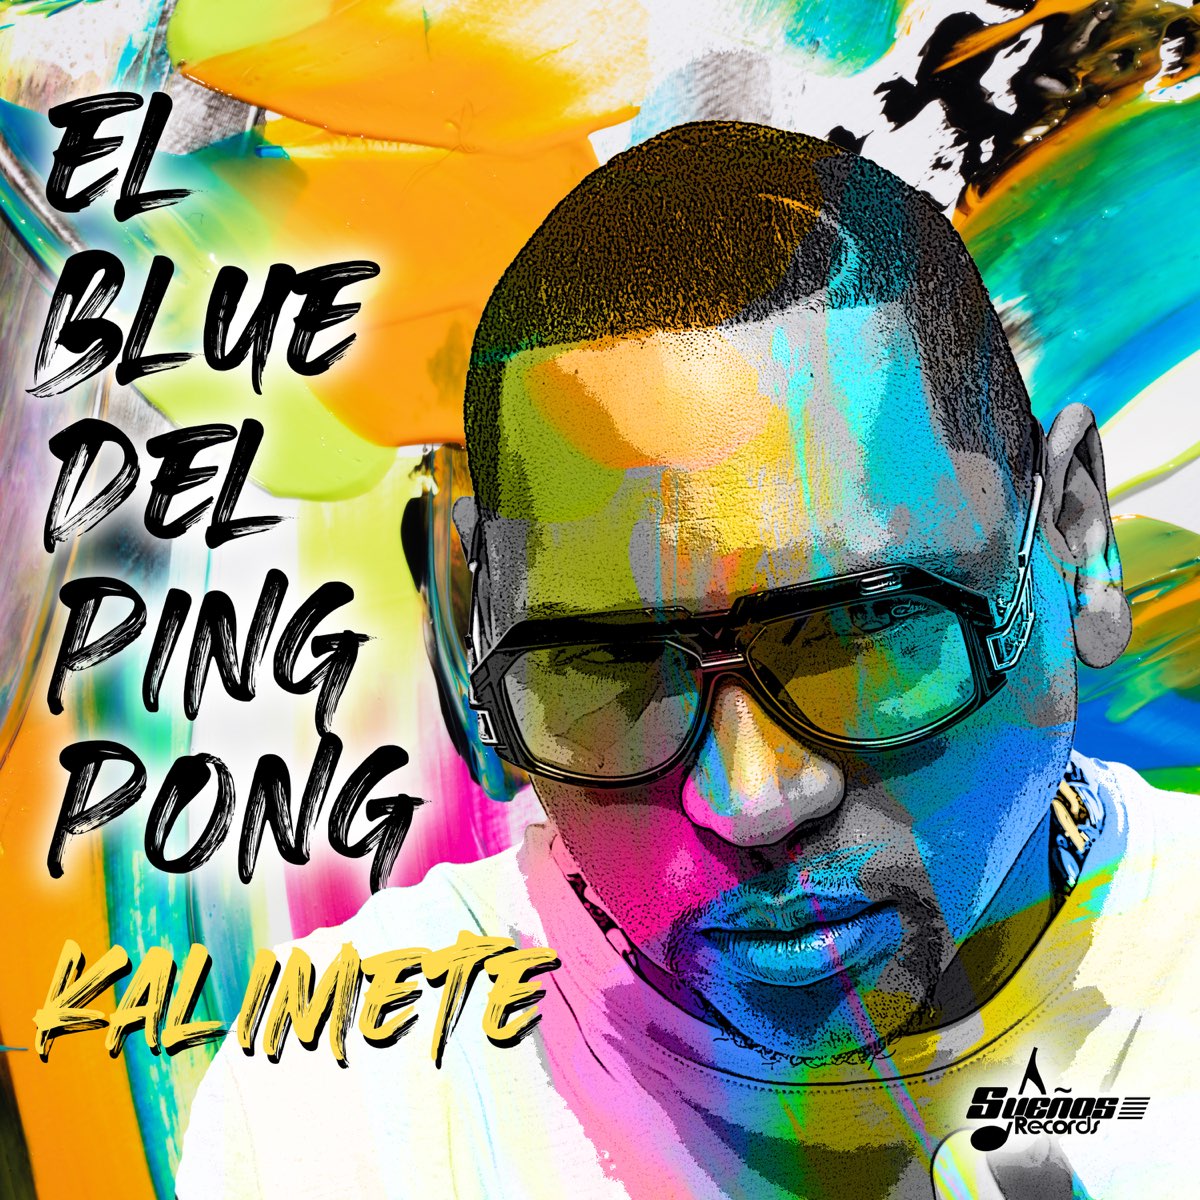 El Blue Del Ping Pong - Single - Album di Kalimete - Apple Music